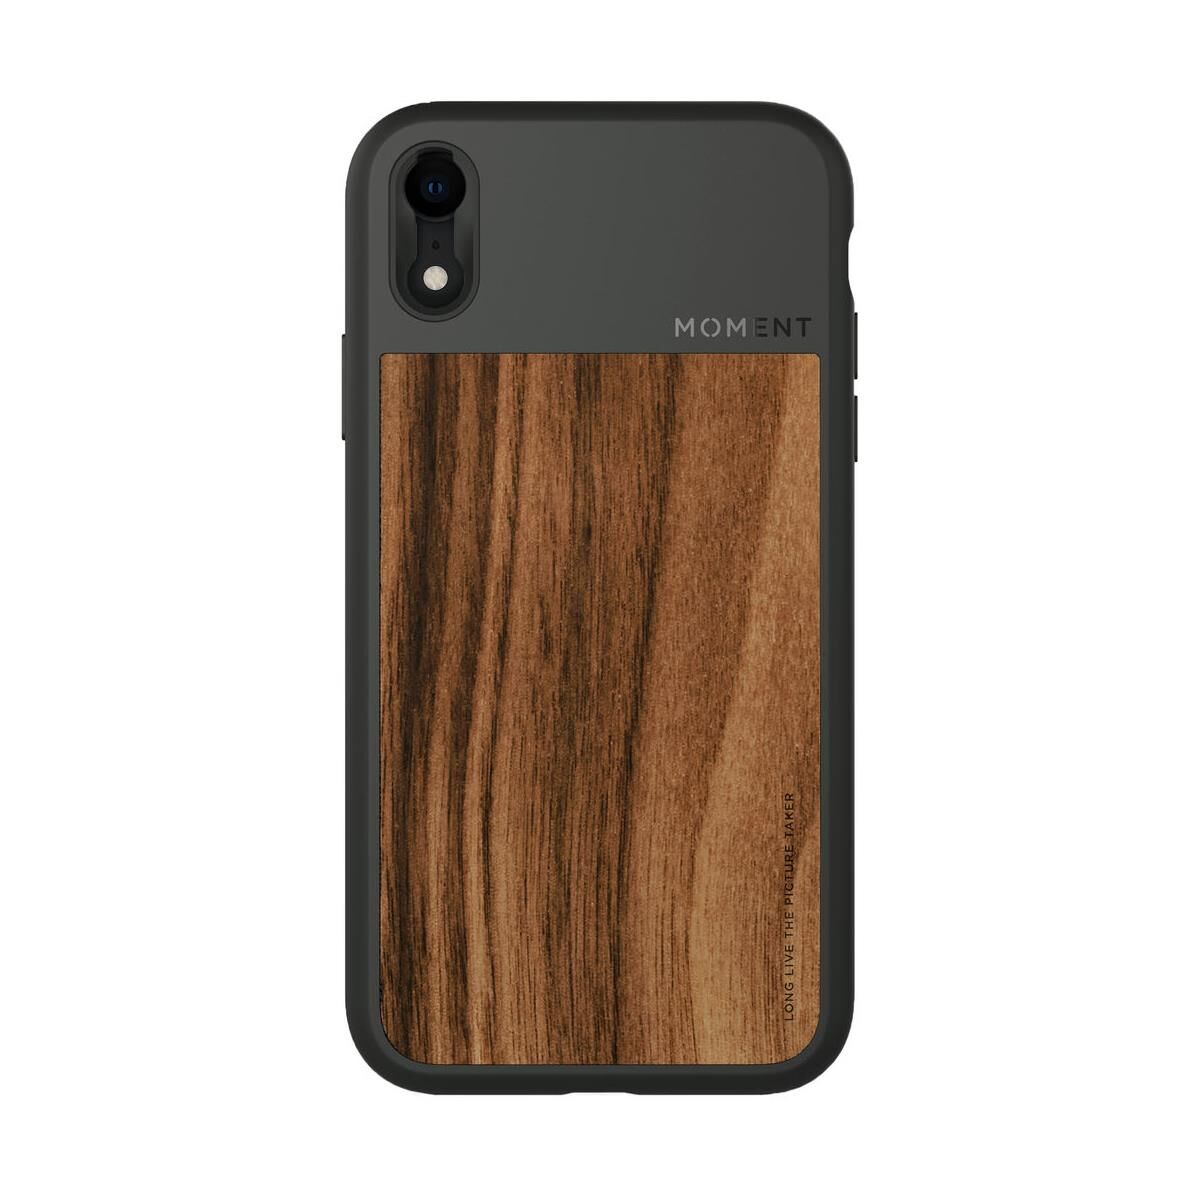 Moment iPhone XR Photo Case, Walnut Wood